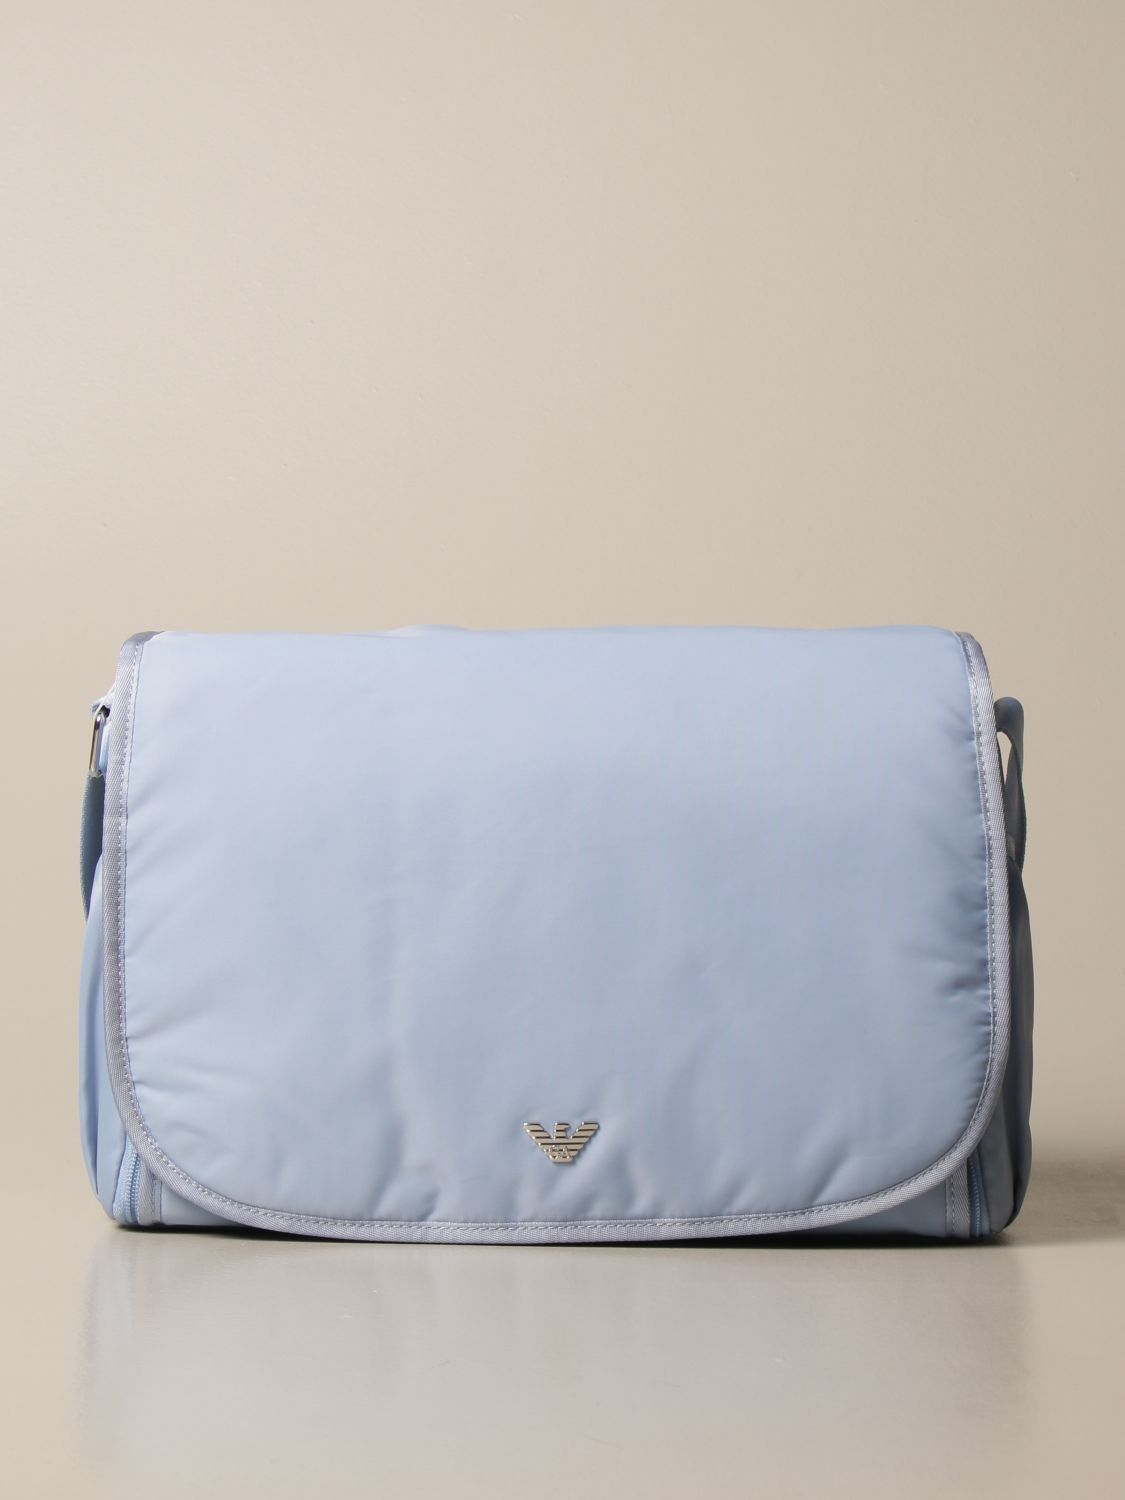 EMPORIO ARMANI: Diaper bag Mama's bag in nylon with logo - Sky Blue |  Emporio Armani bag 402145 CC904 online on 